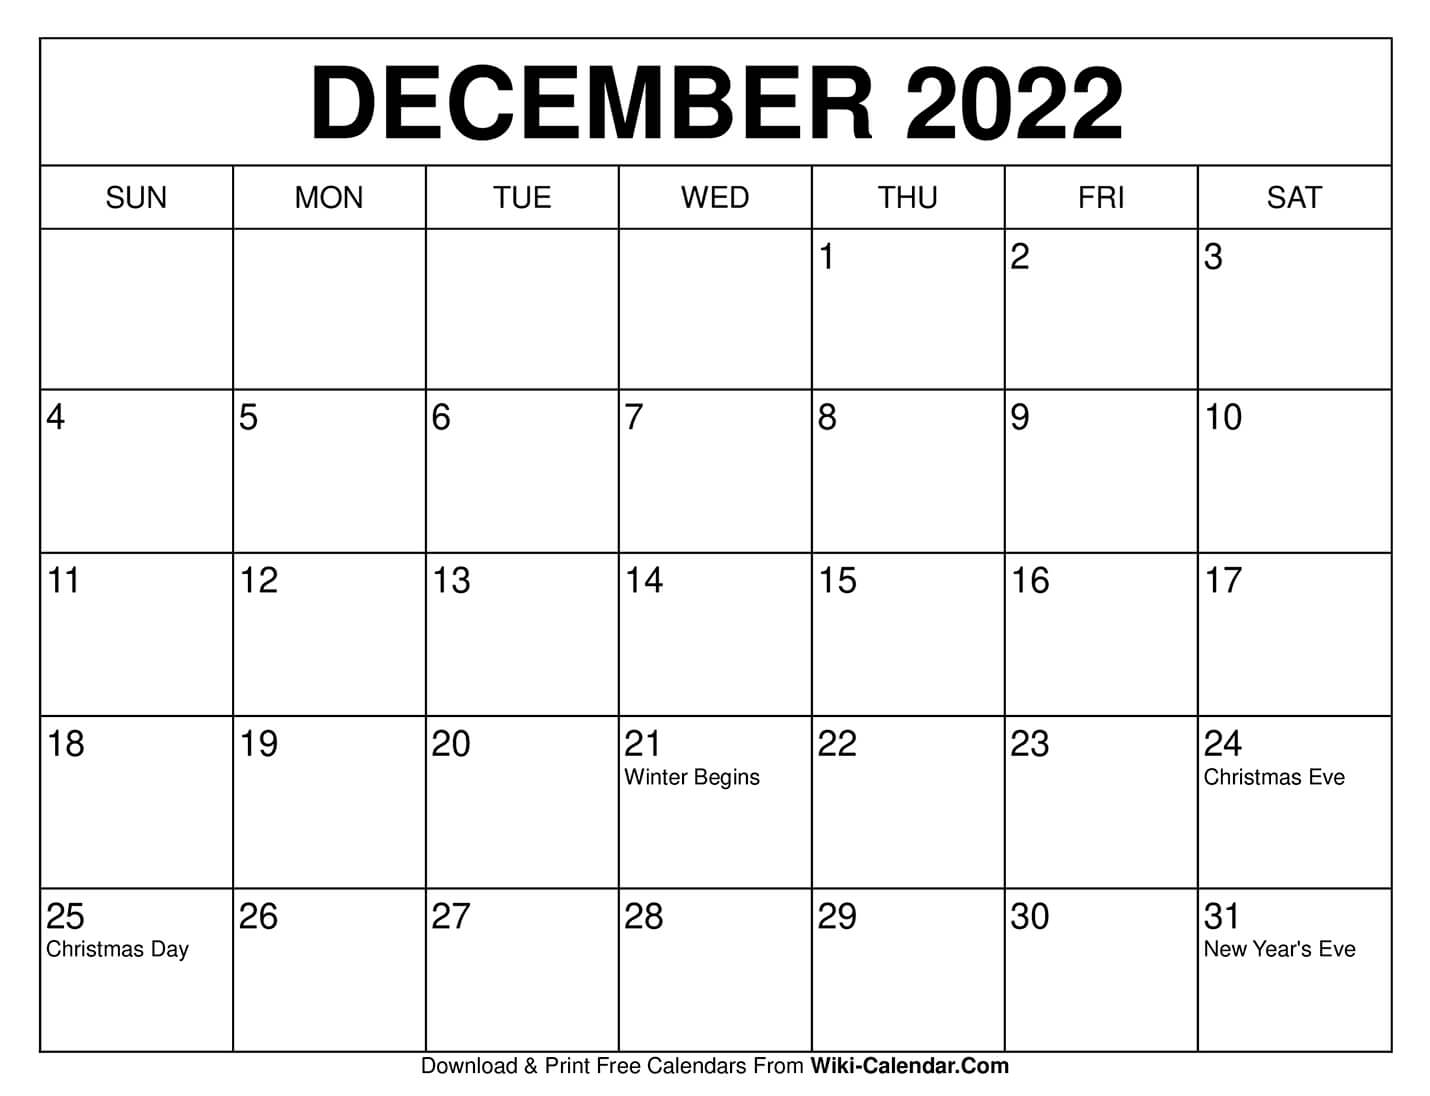 Free Printable December 2022 Calendars Wiki Calendar December 2022 Vrogue